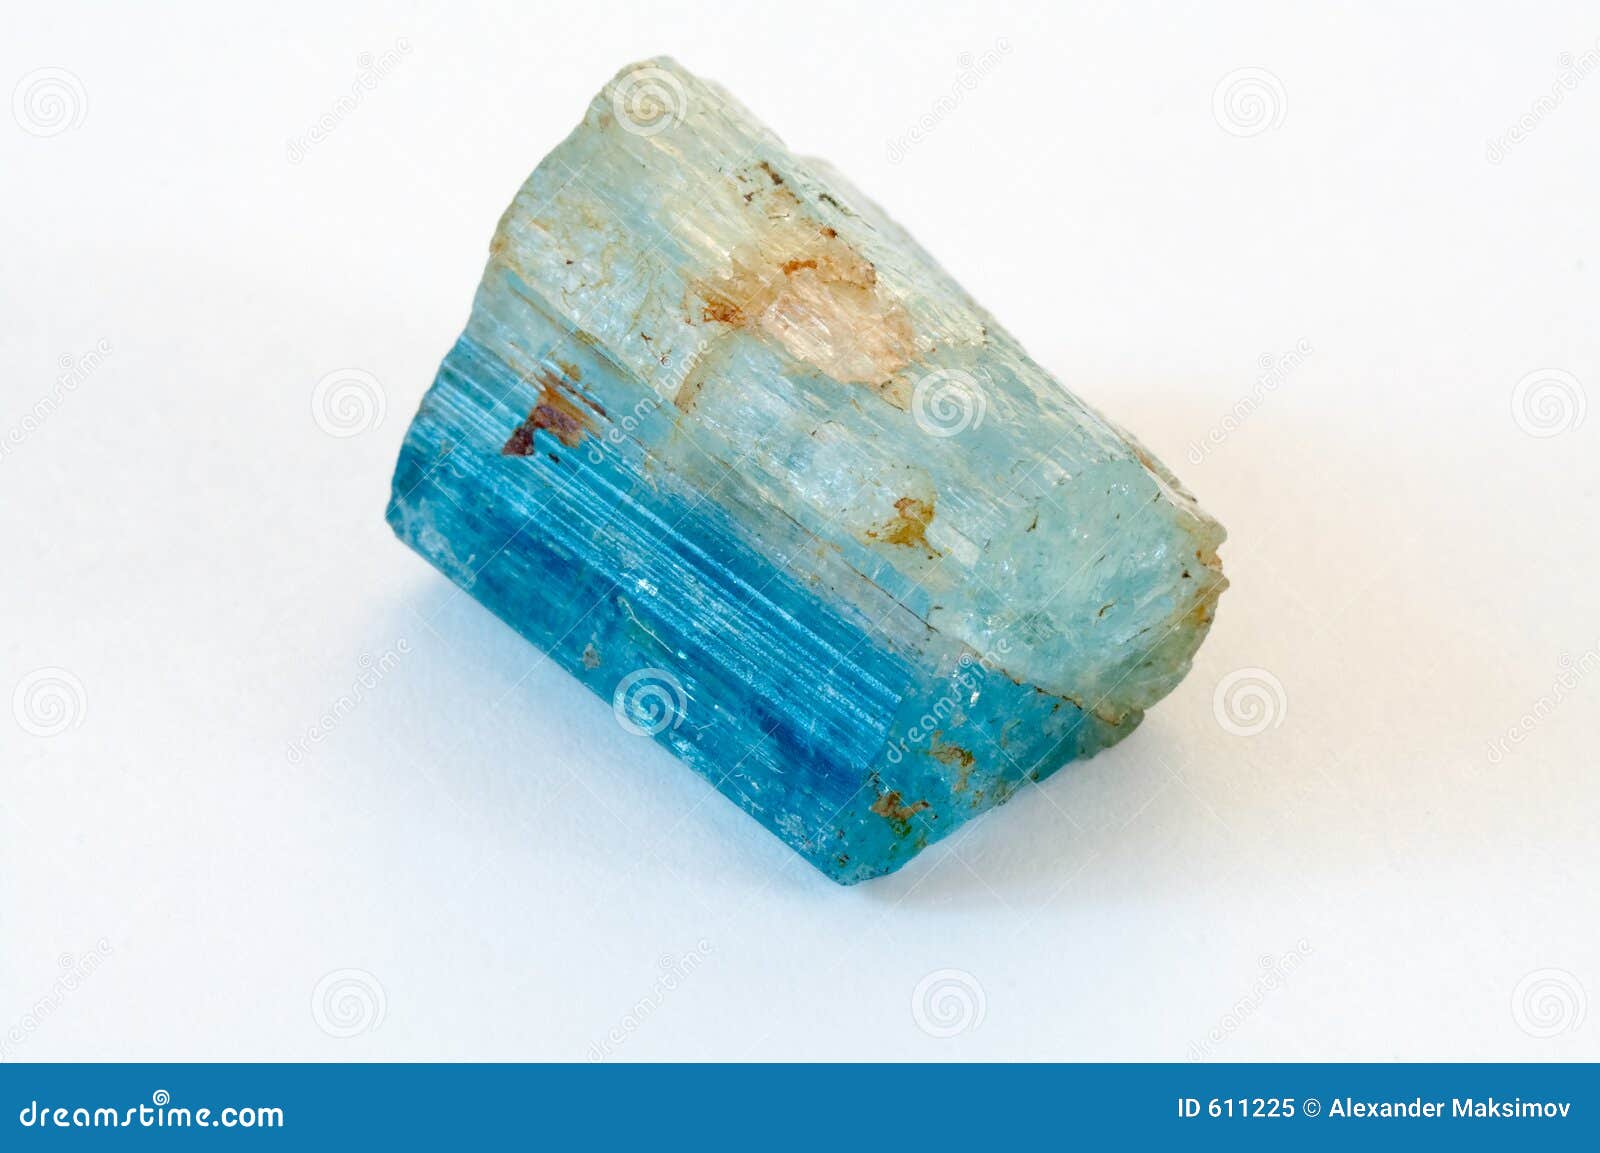 crystal of aquamarine